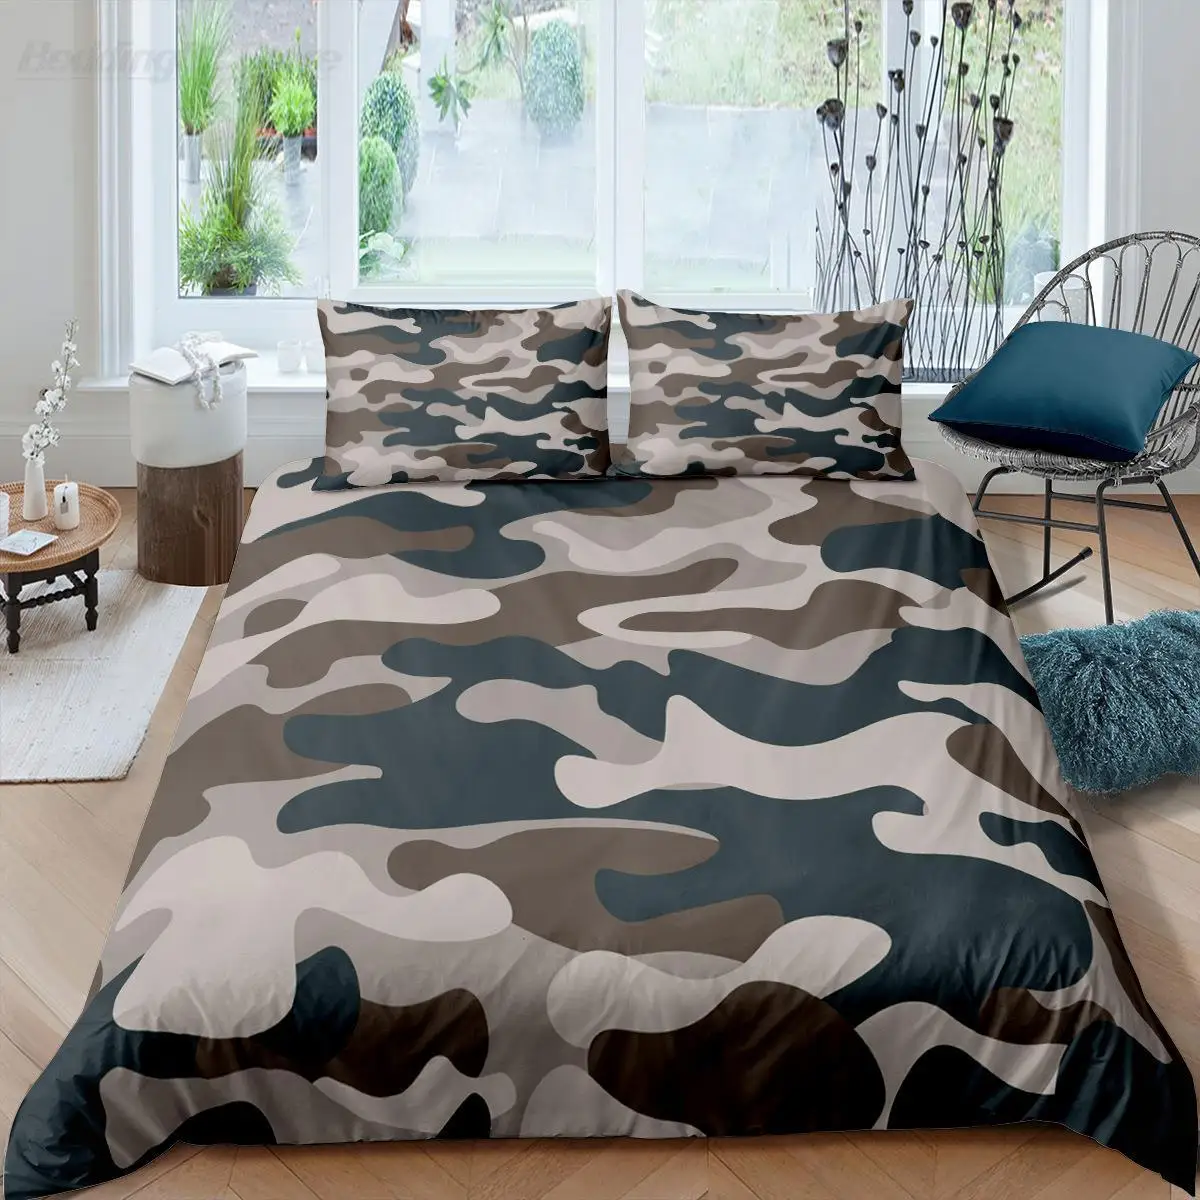 

Camo Duvet Cover Set Vibrant Camouflage Lattice Like Service Theme Modern Design King Size for Boys Girl Polyester Bedding Set